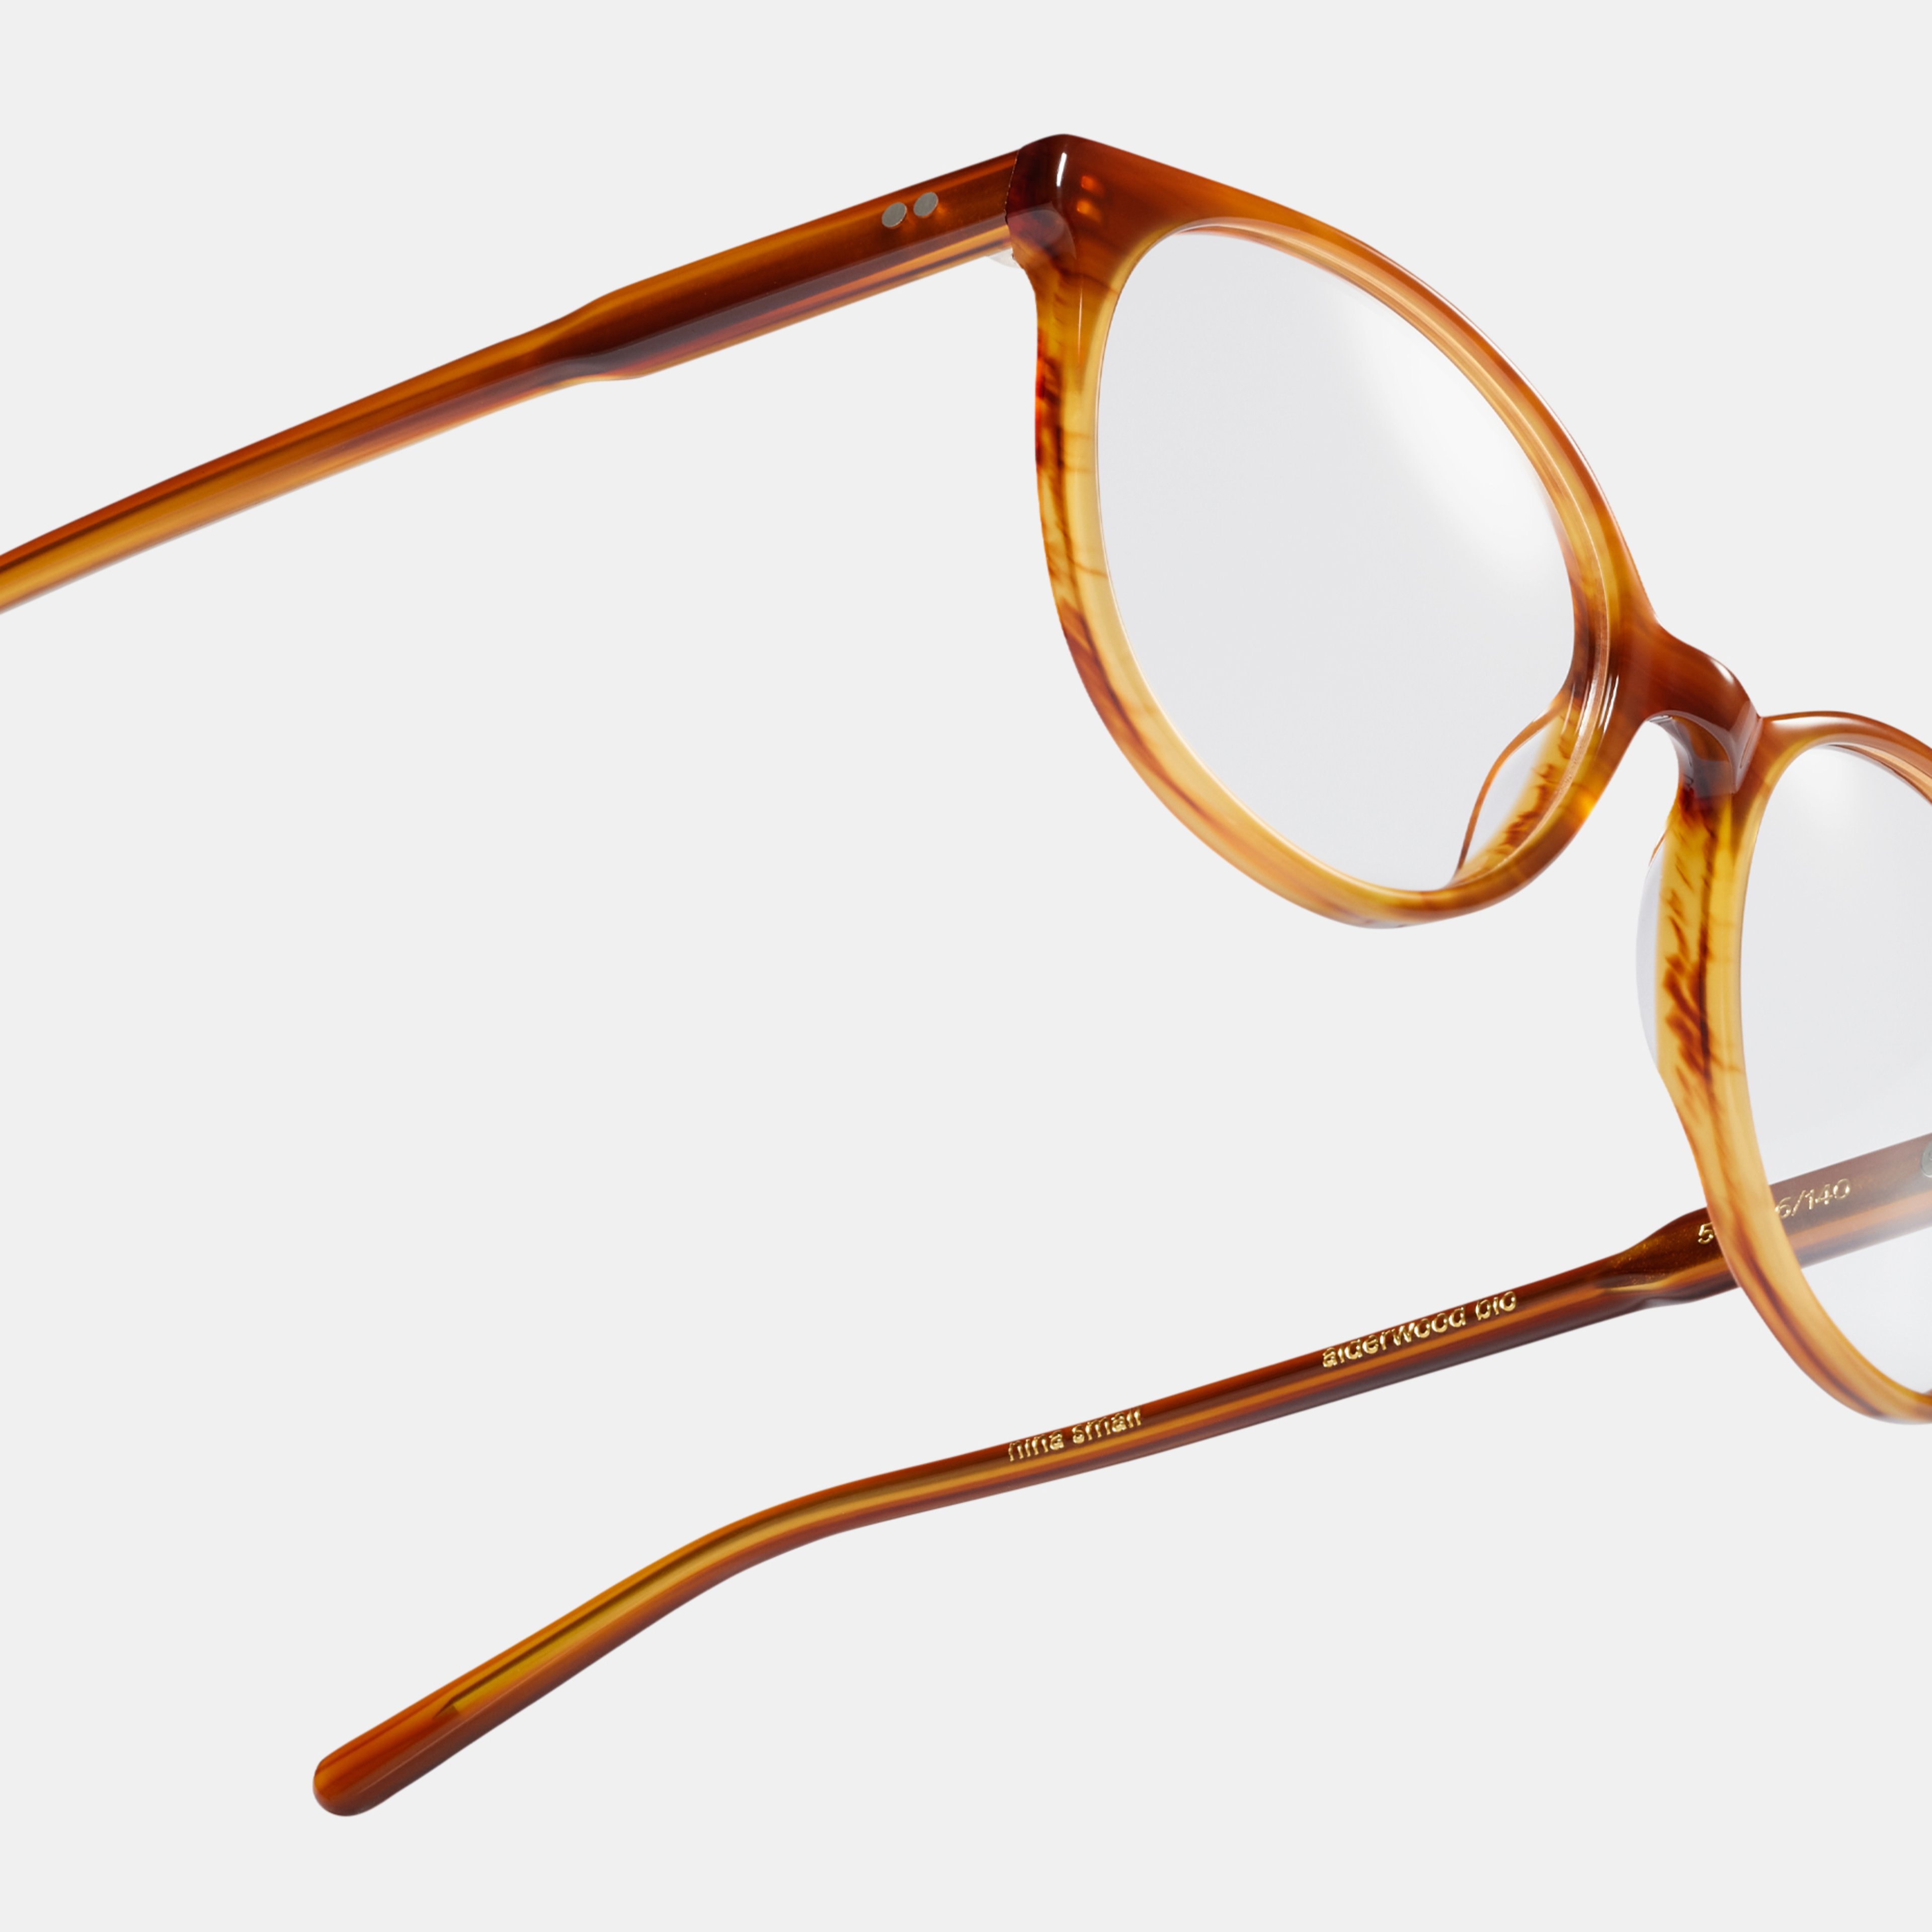 Ace & Tate Glasses | oval Acetate in Brown, Orange